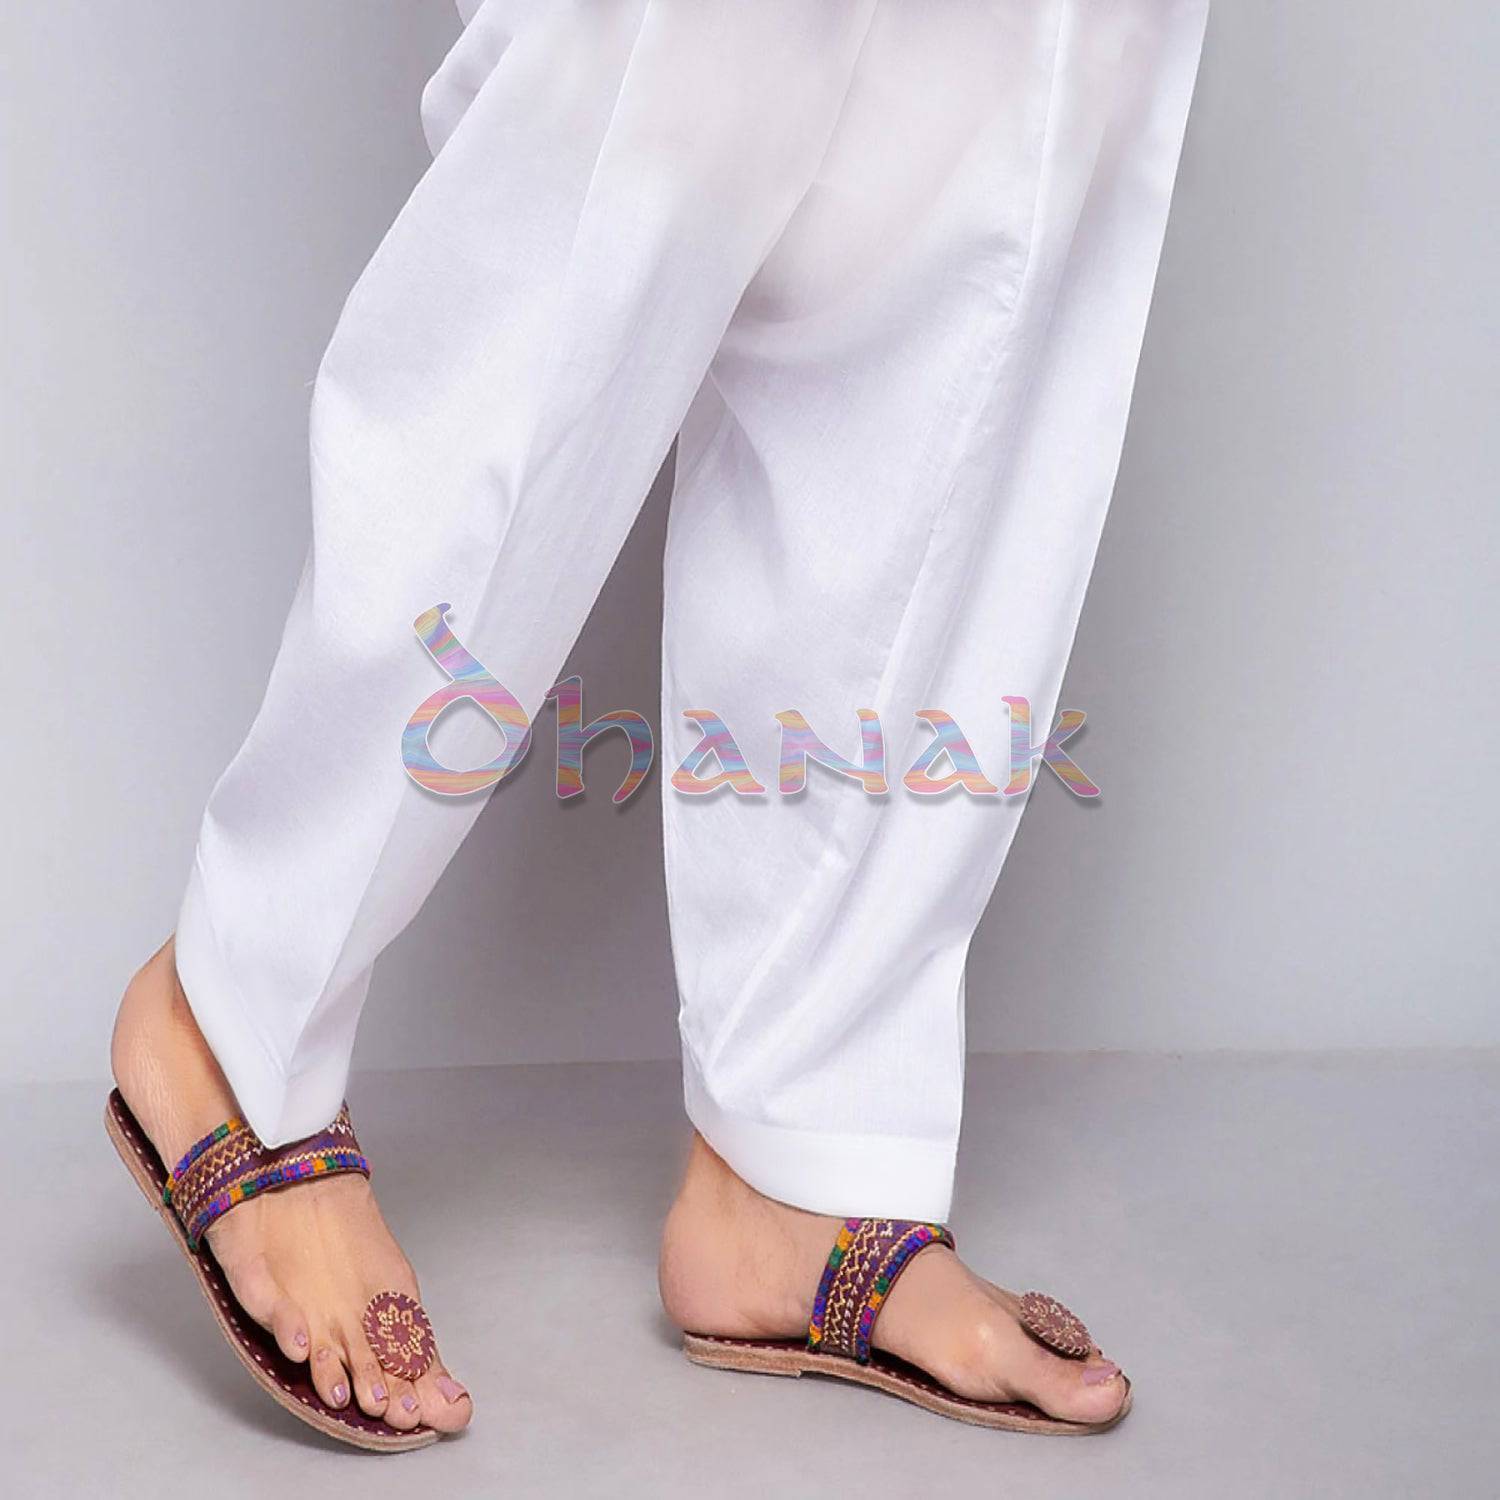 Basic Shalwar for Women in Cotton - PSC01 - Dhanak Boutique